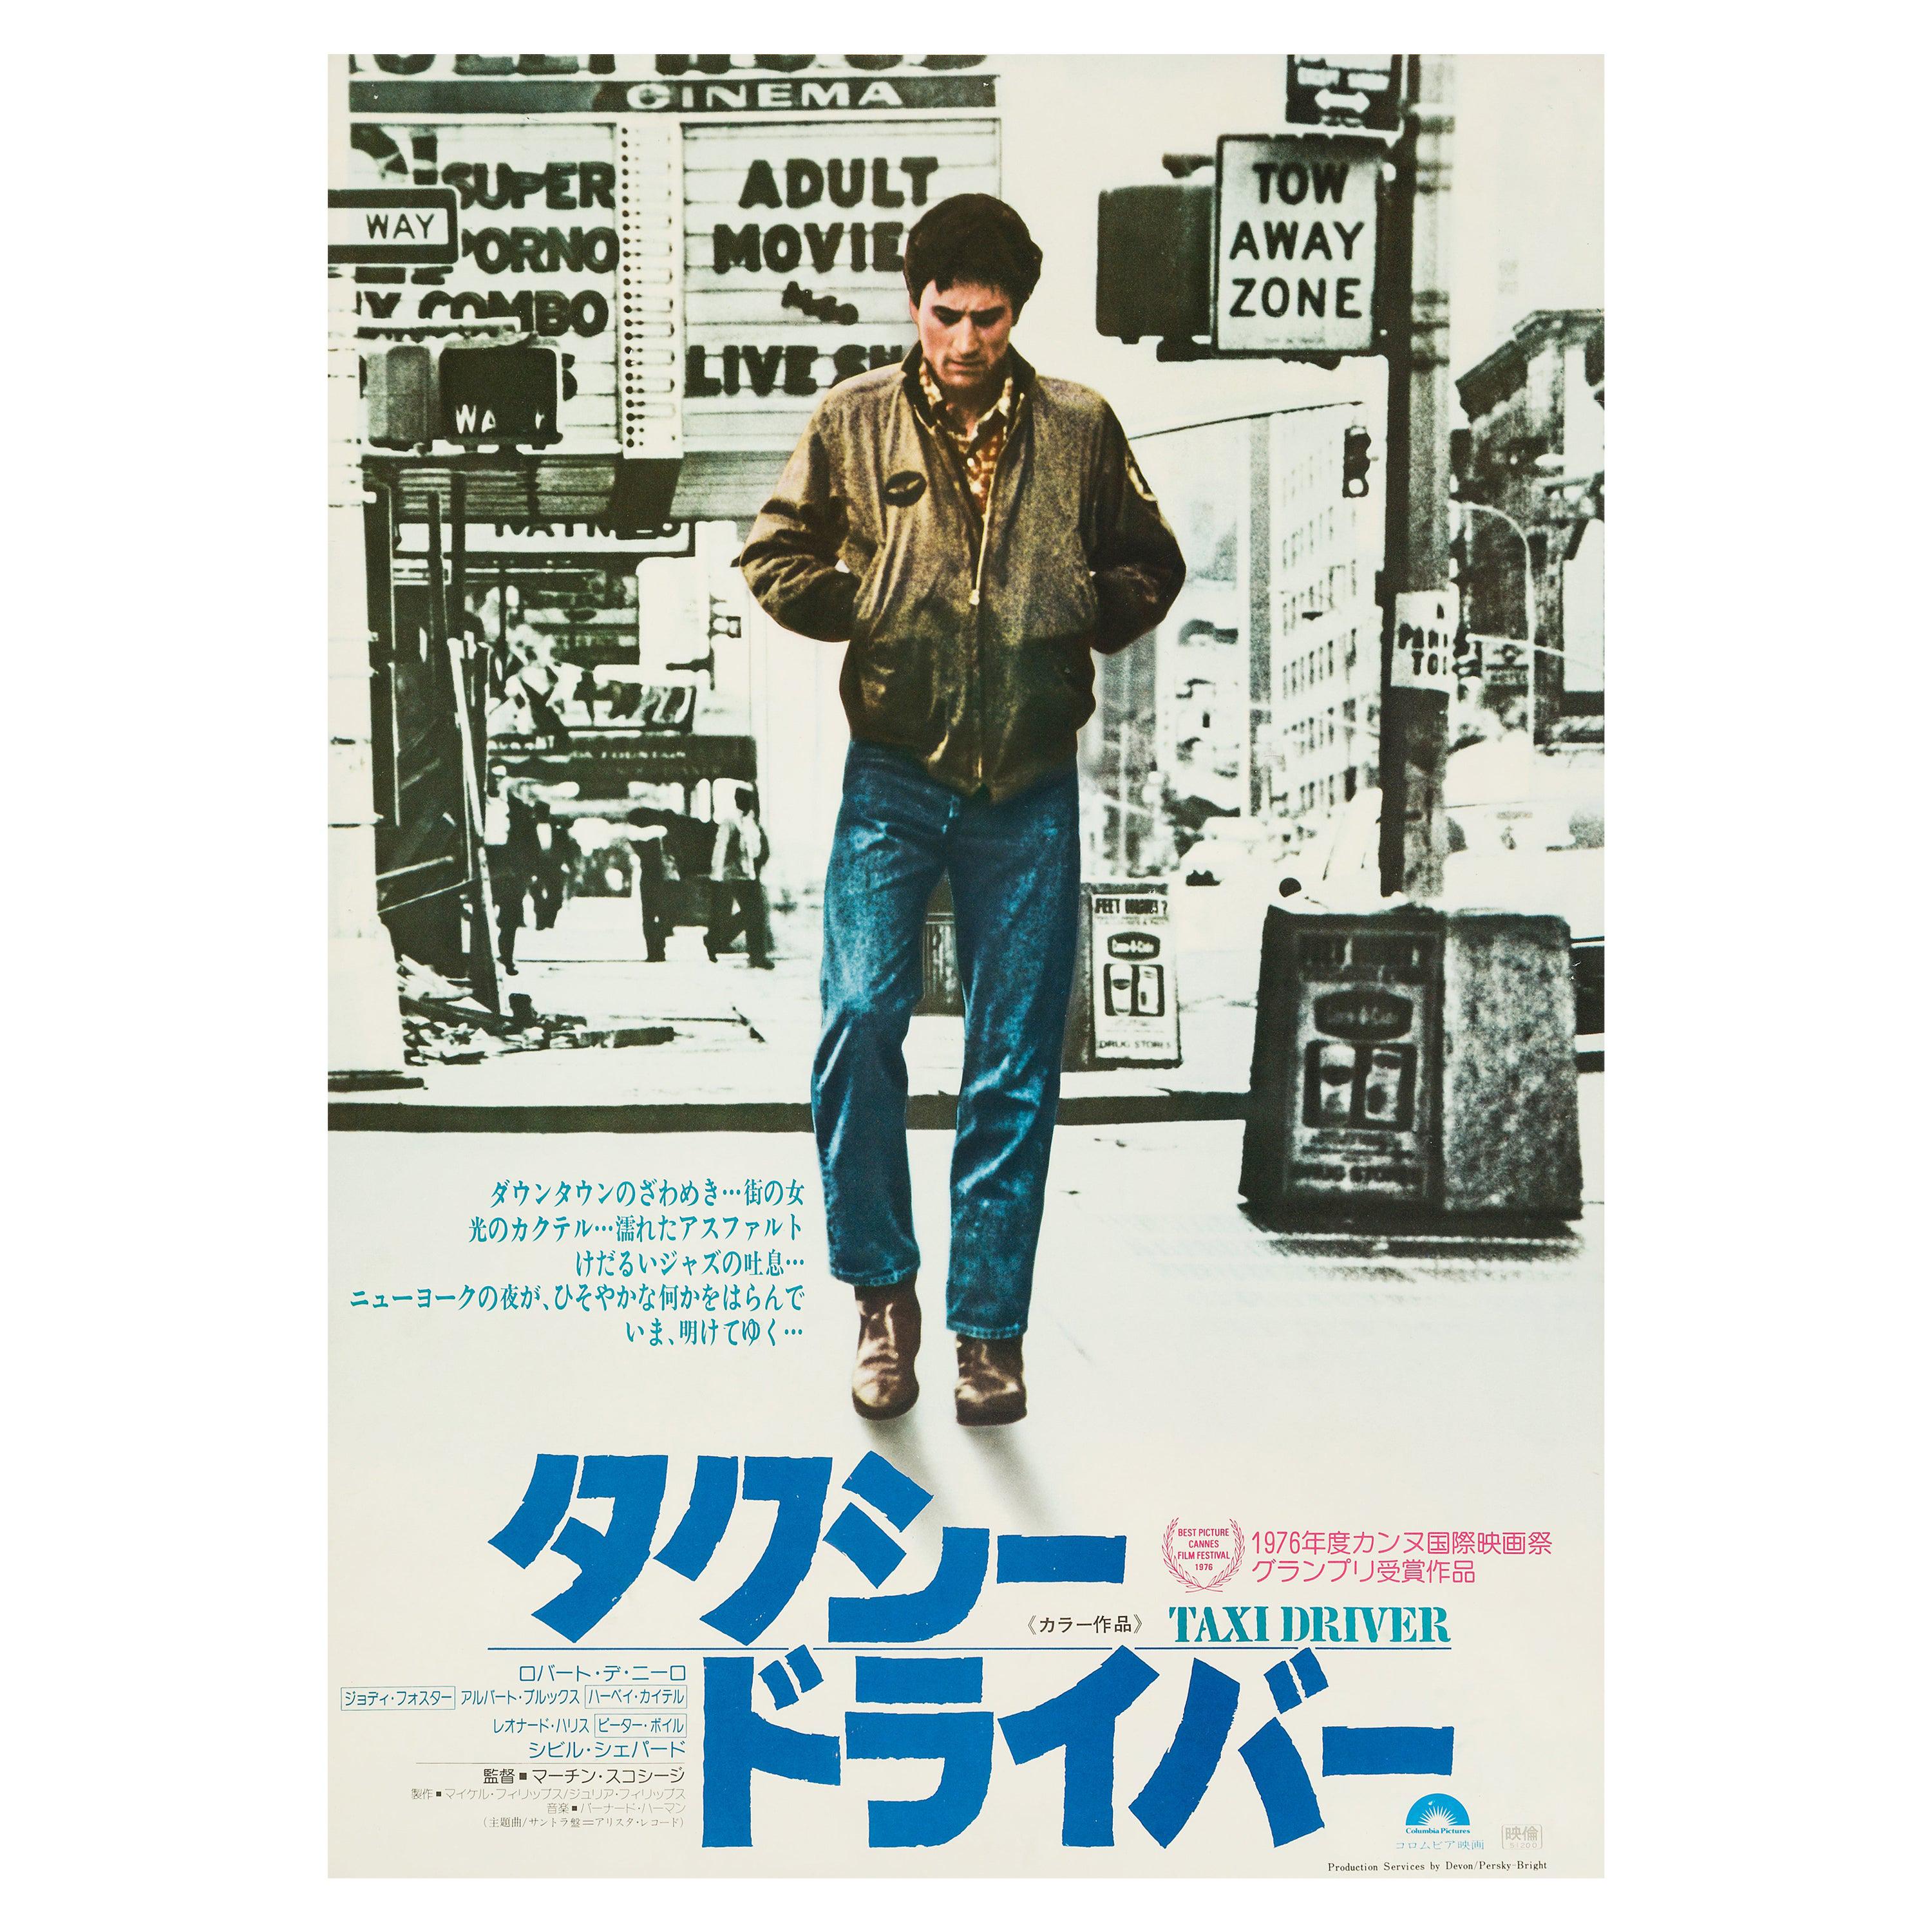 'Taxi Driver' Original Vintage Movie Poster, Japanese, 1976